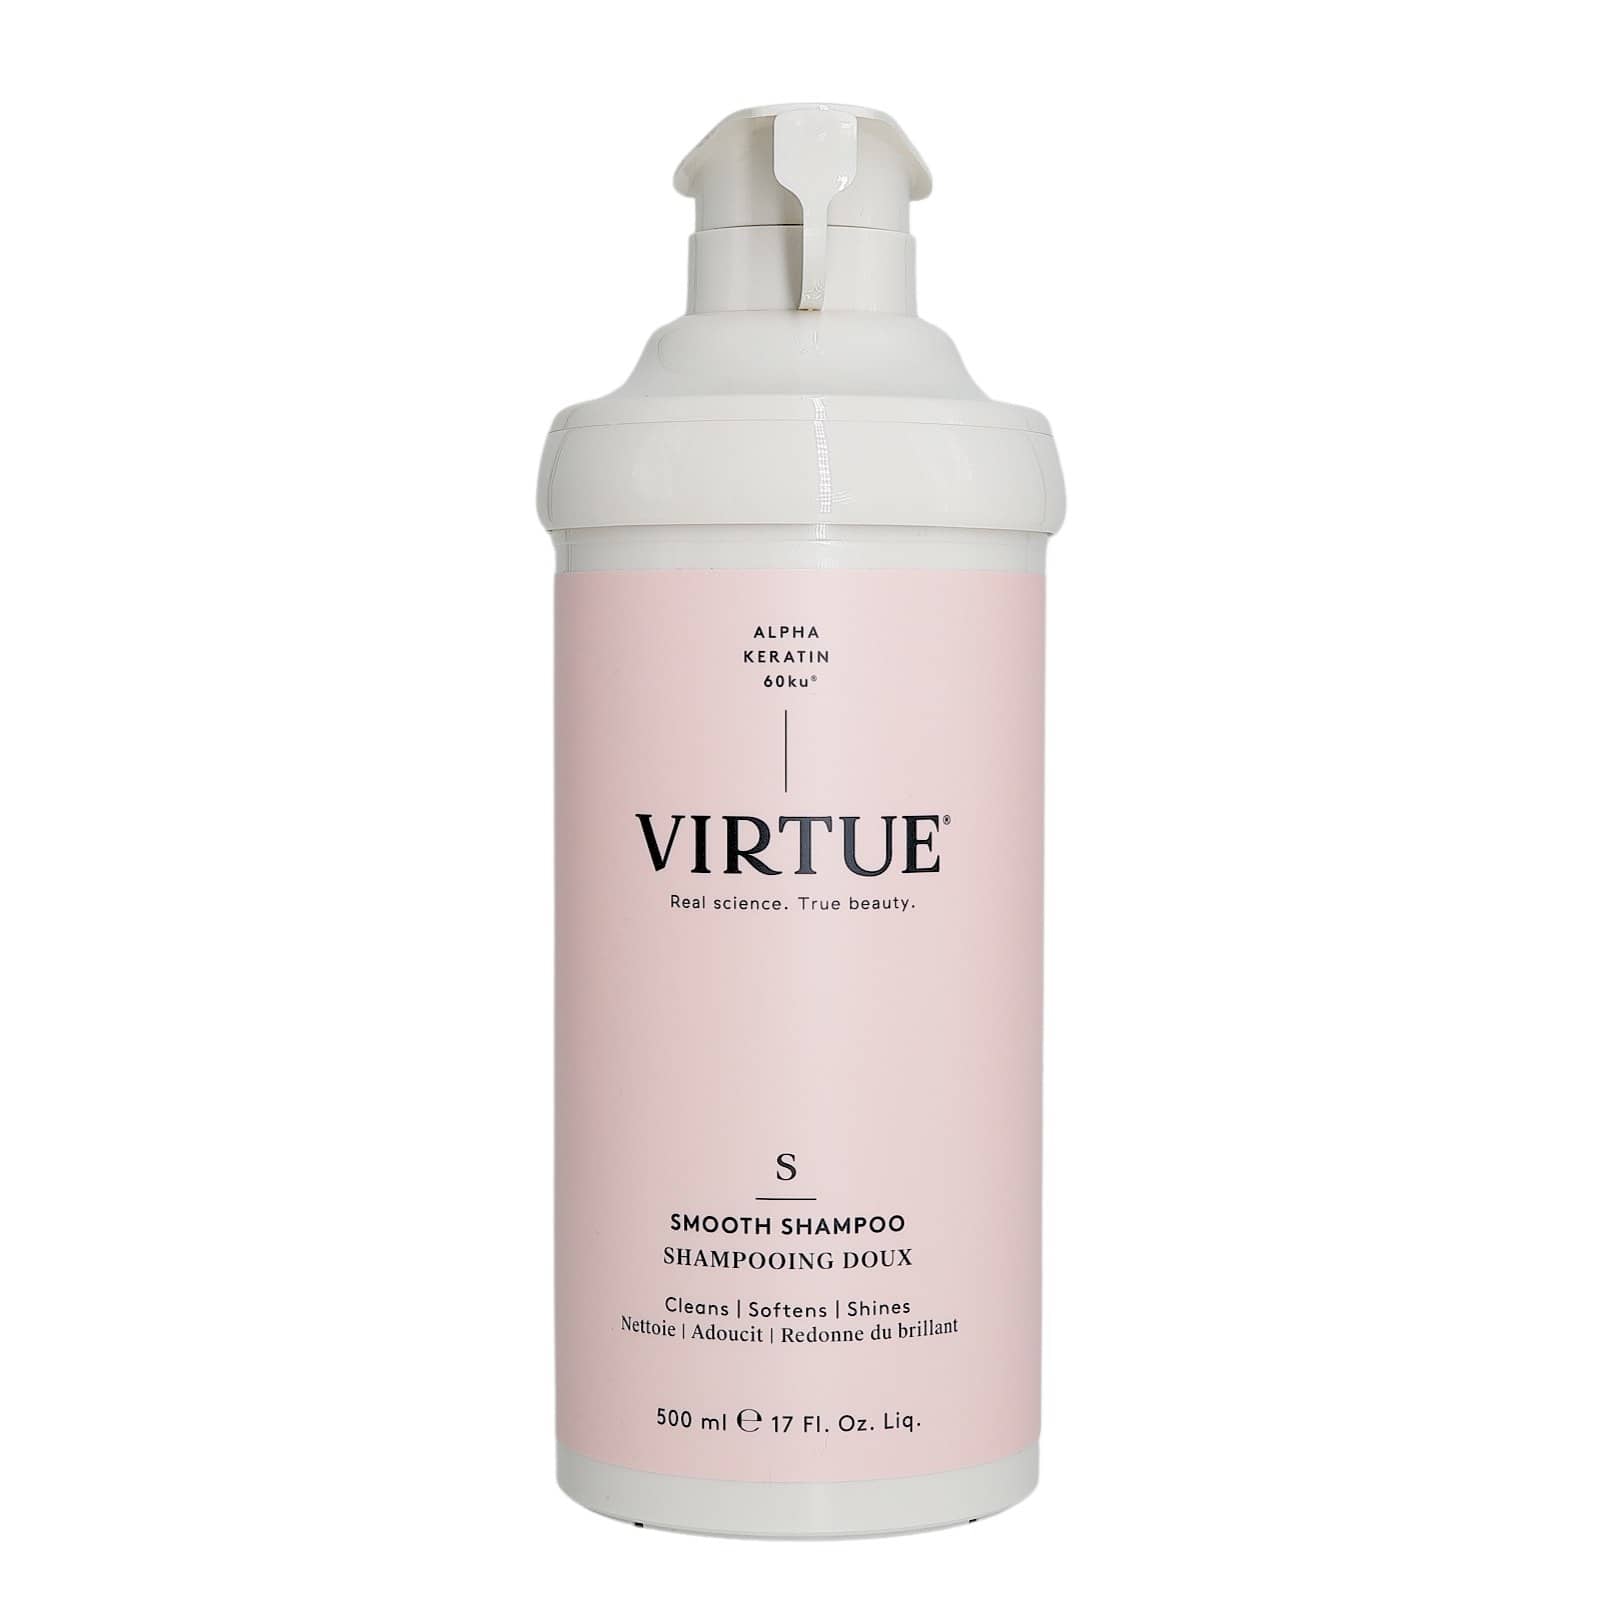 Virtue smooth shampoo 500ml